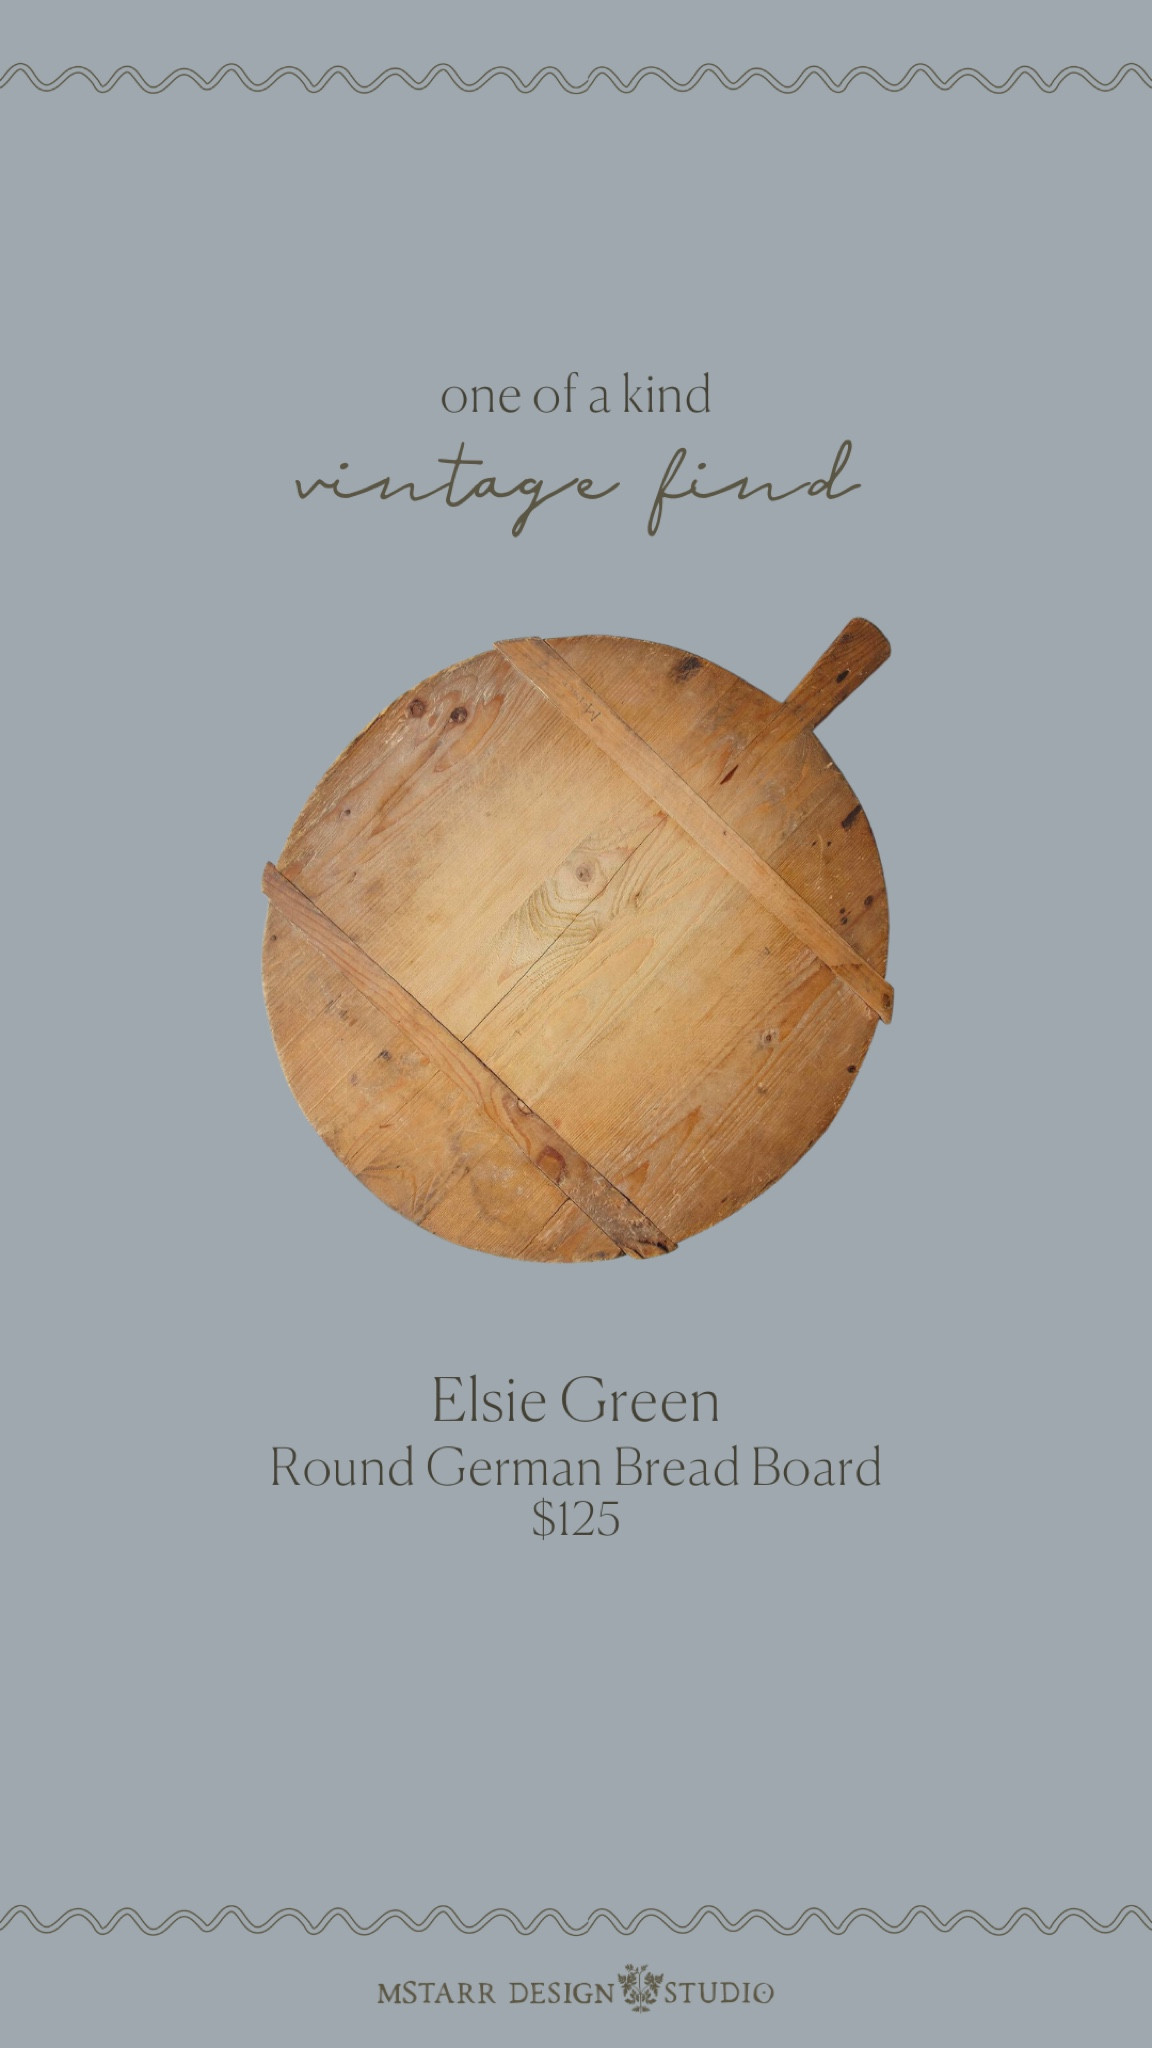 Vintage French Bread Board, elsie green